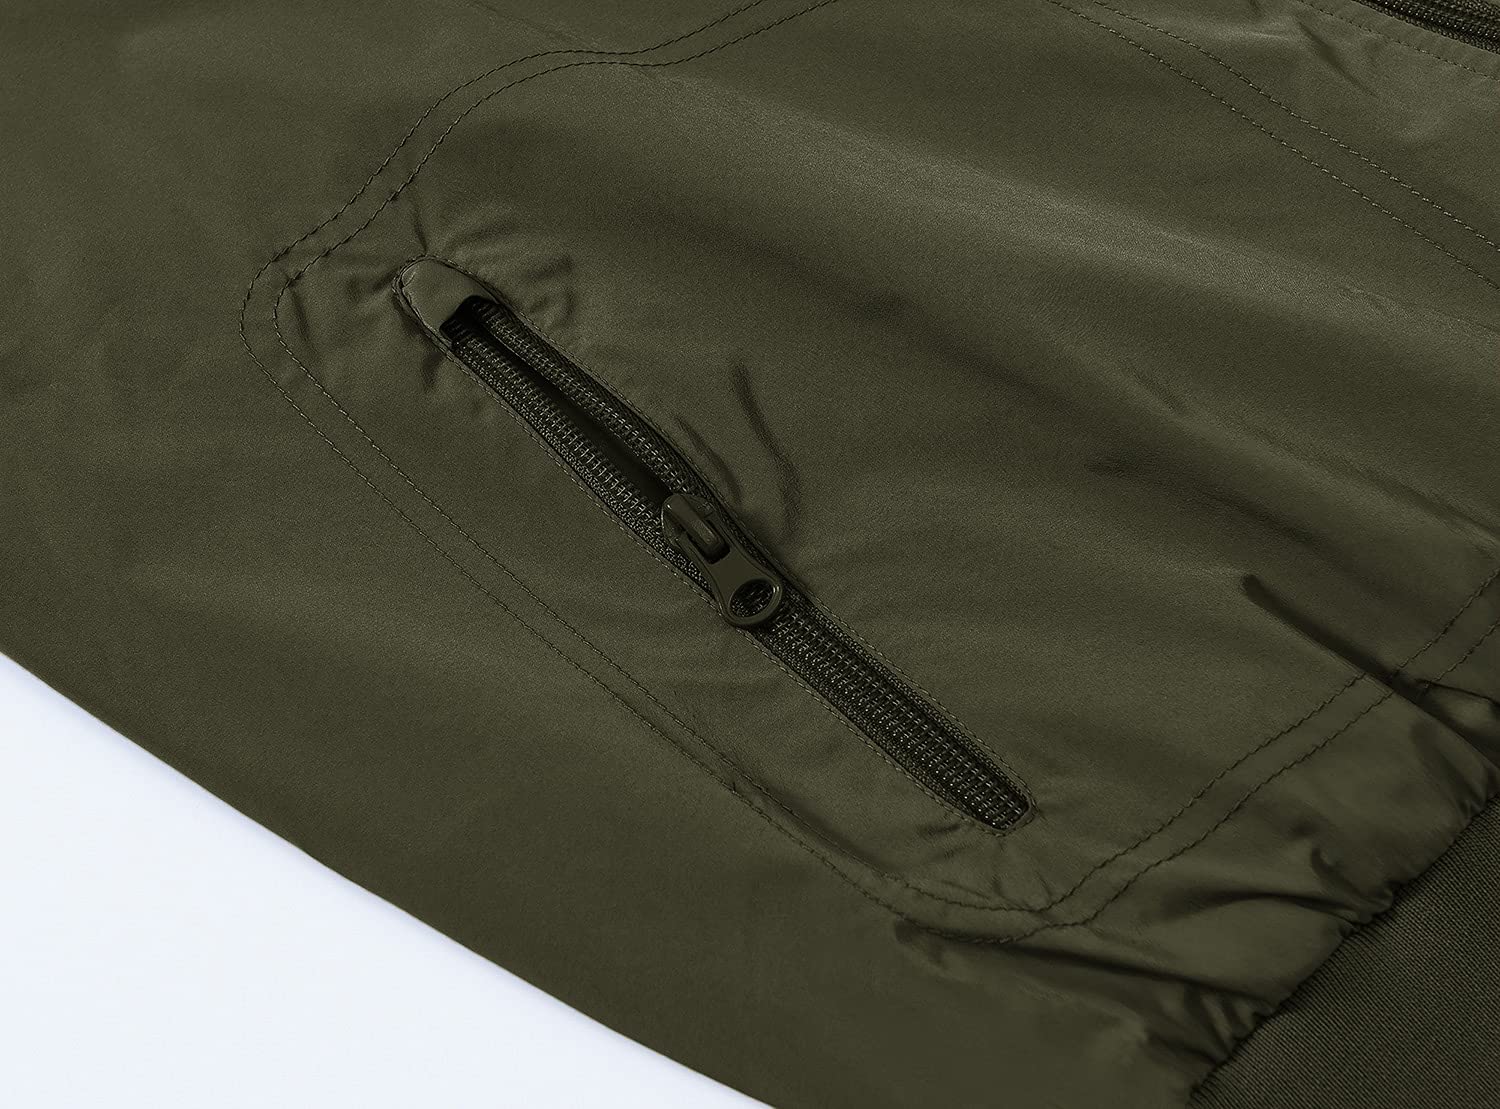 TBMPOY Men's Windproof Bomber Jackets Lightweight Running Windbreaker Outdoor Golf Fashion Coat, 7-dark Army Green, Large